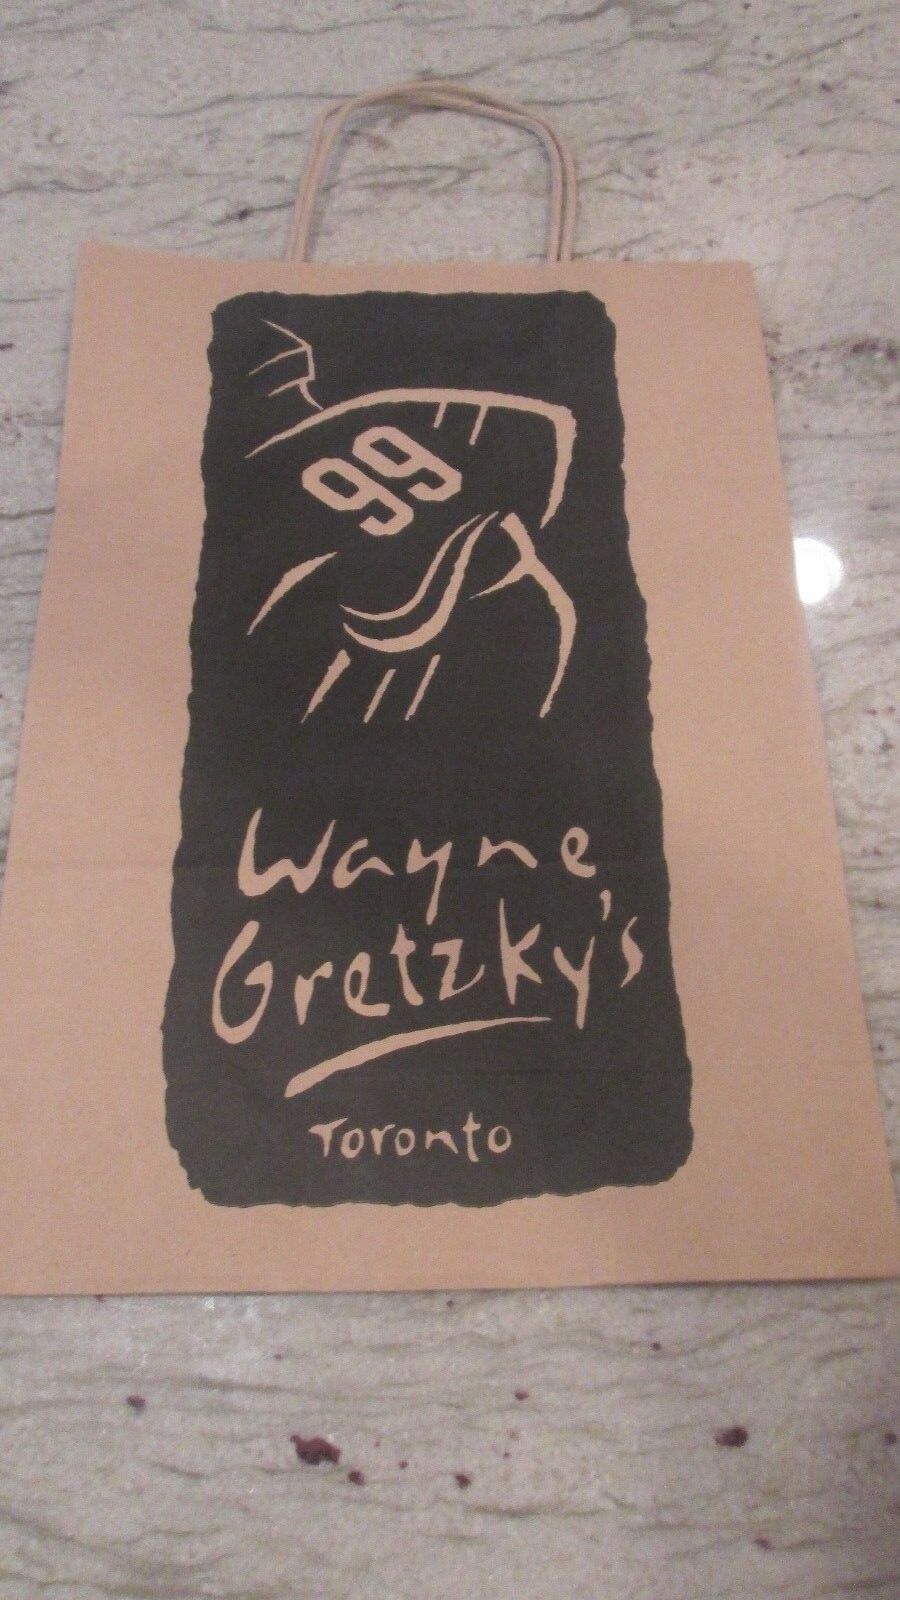 New- Wayne Gretzky's Reataurant-toronto,canada Logo Shop Bag-2 Sided-10x14""